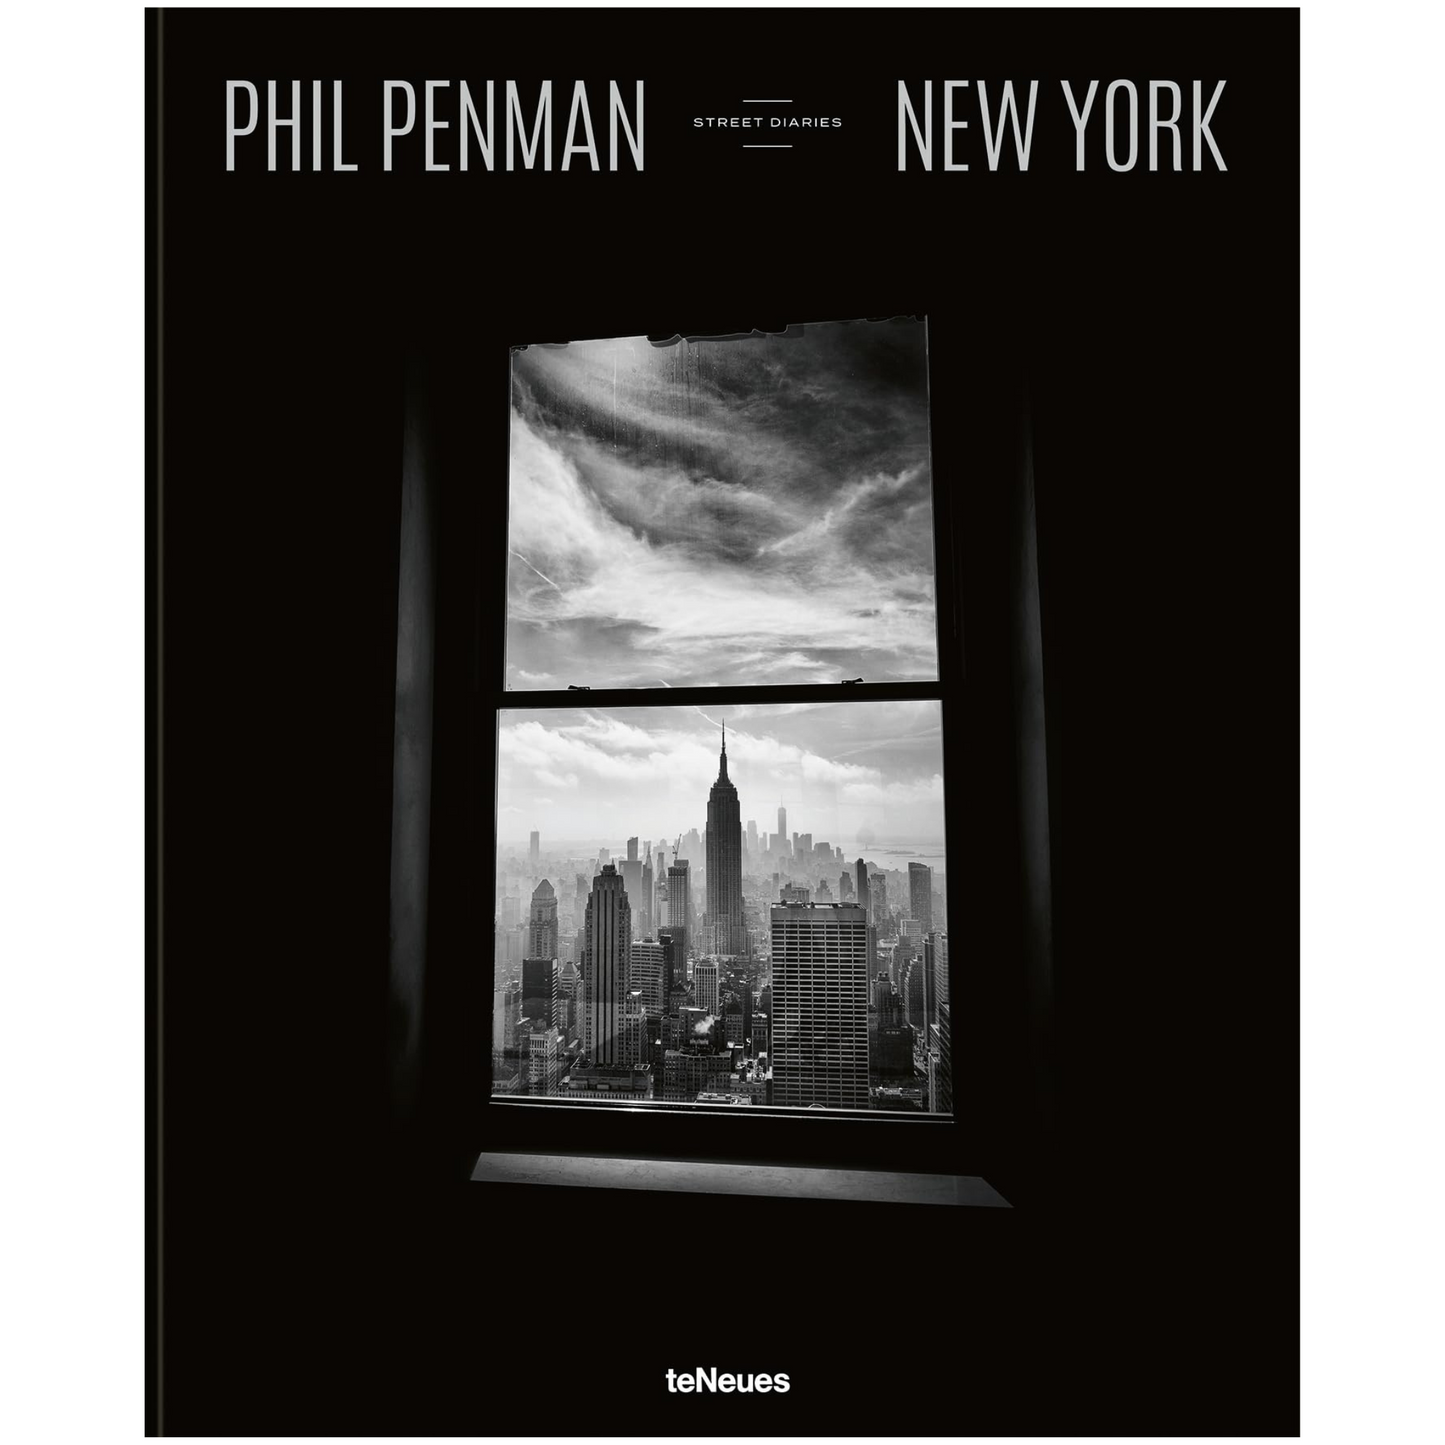 New York Street Diaries, Phil Penman - teNeues